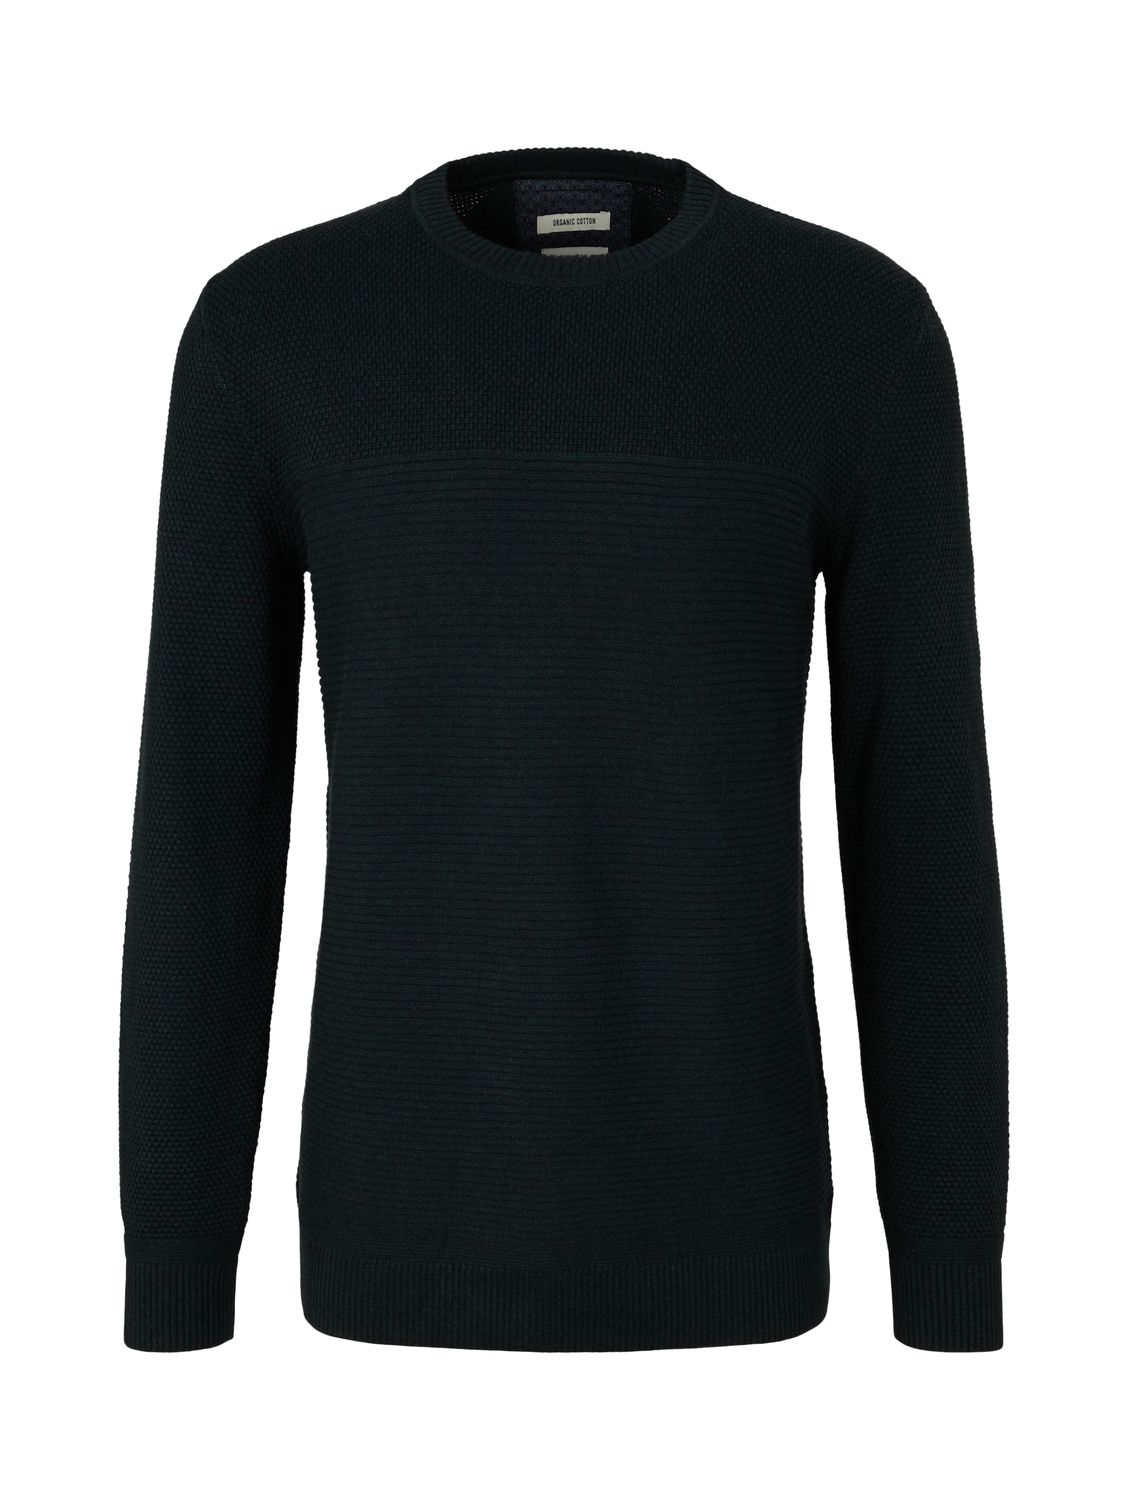 Пуловер Tom Tailor BASIC STRUCTURED, черный пуловер tom tailor denim structured basic серый